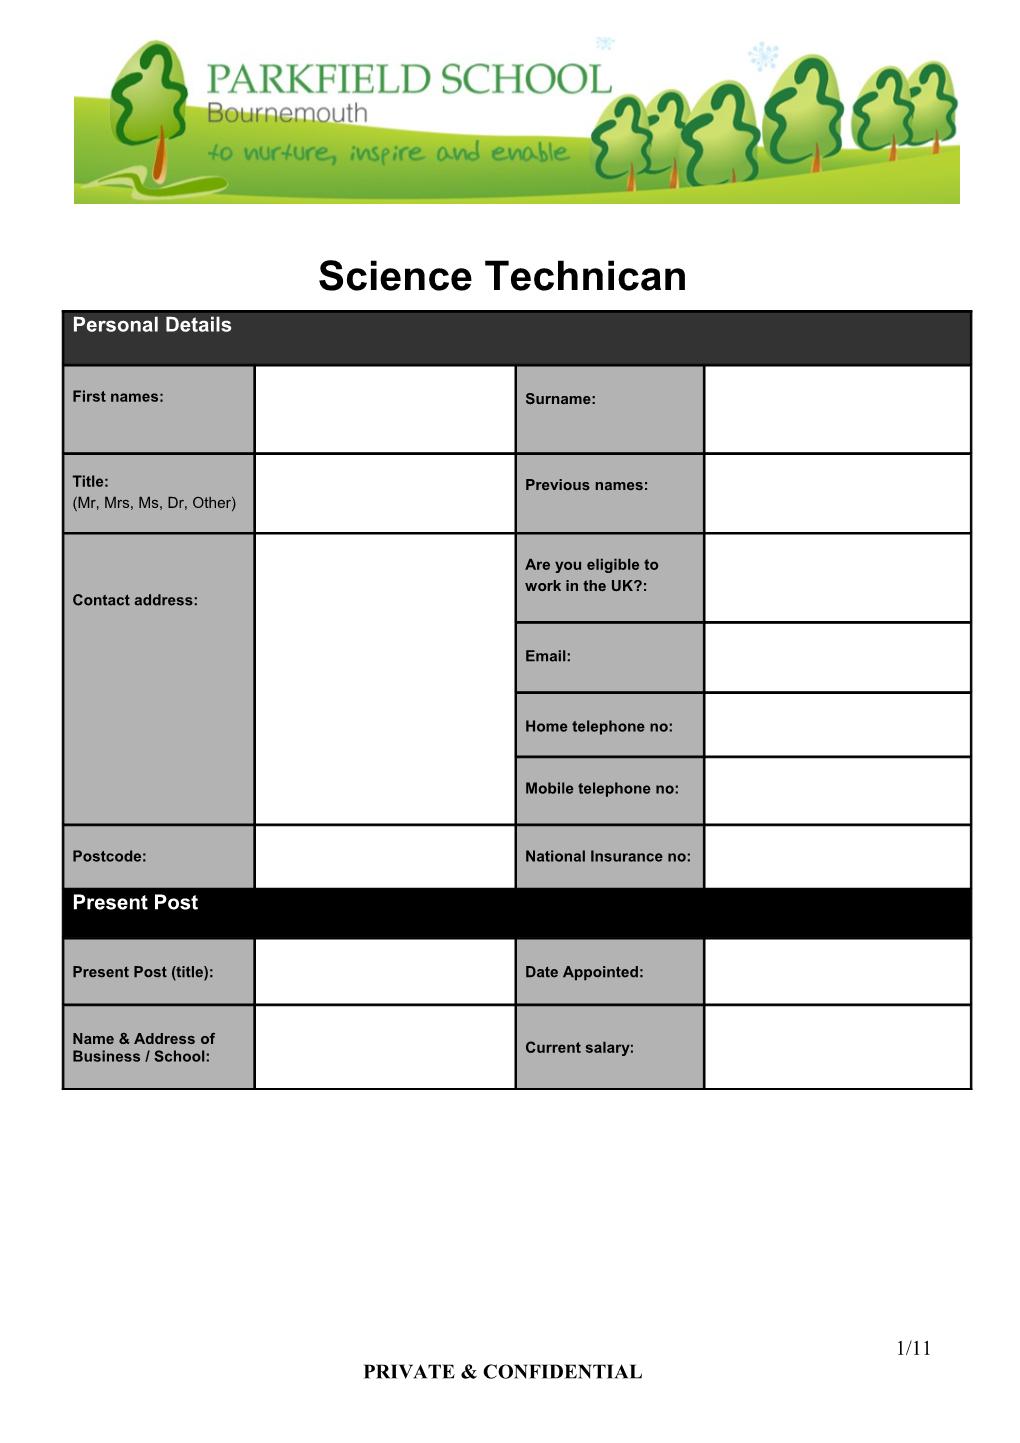 Science Technican